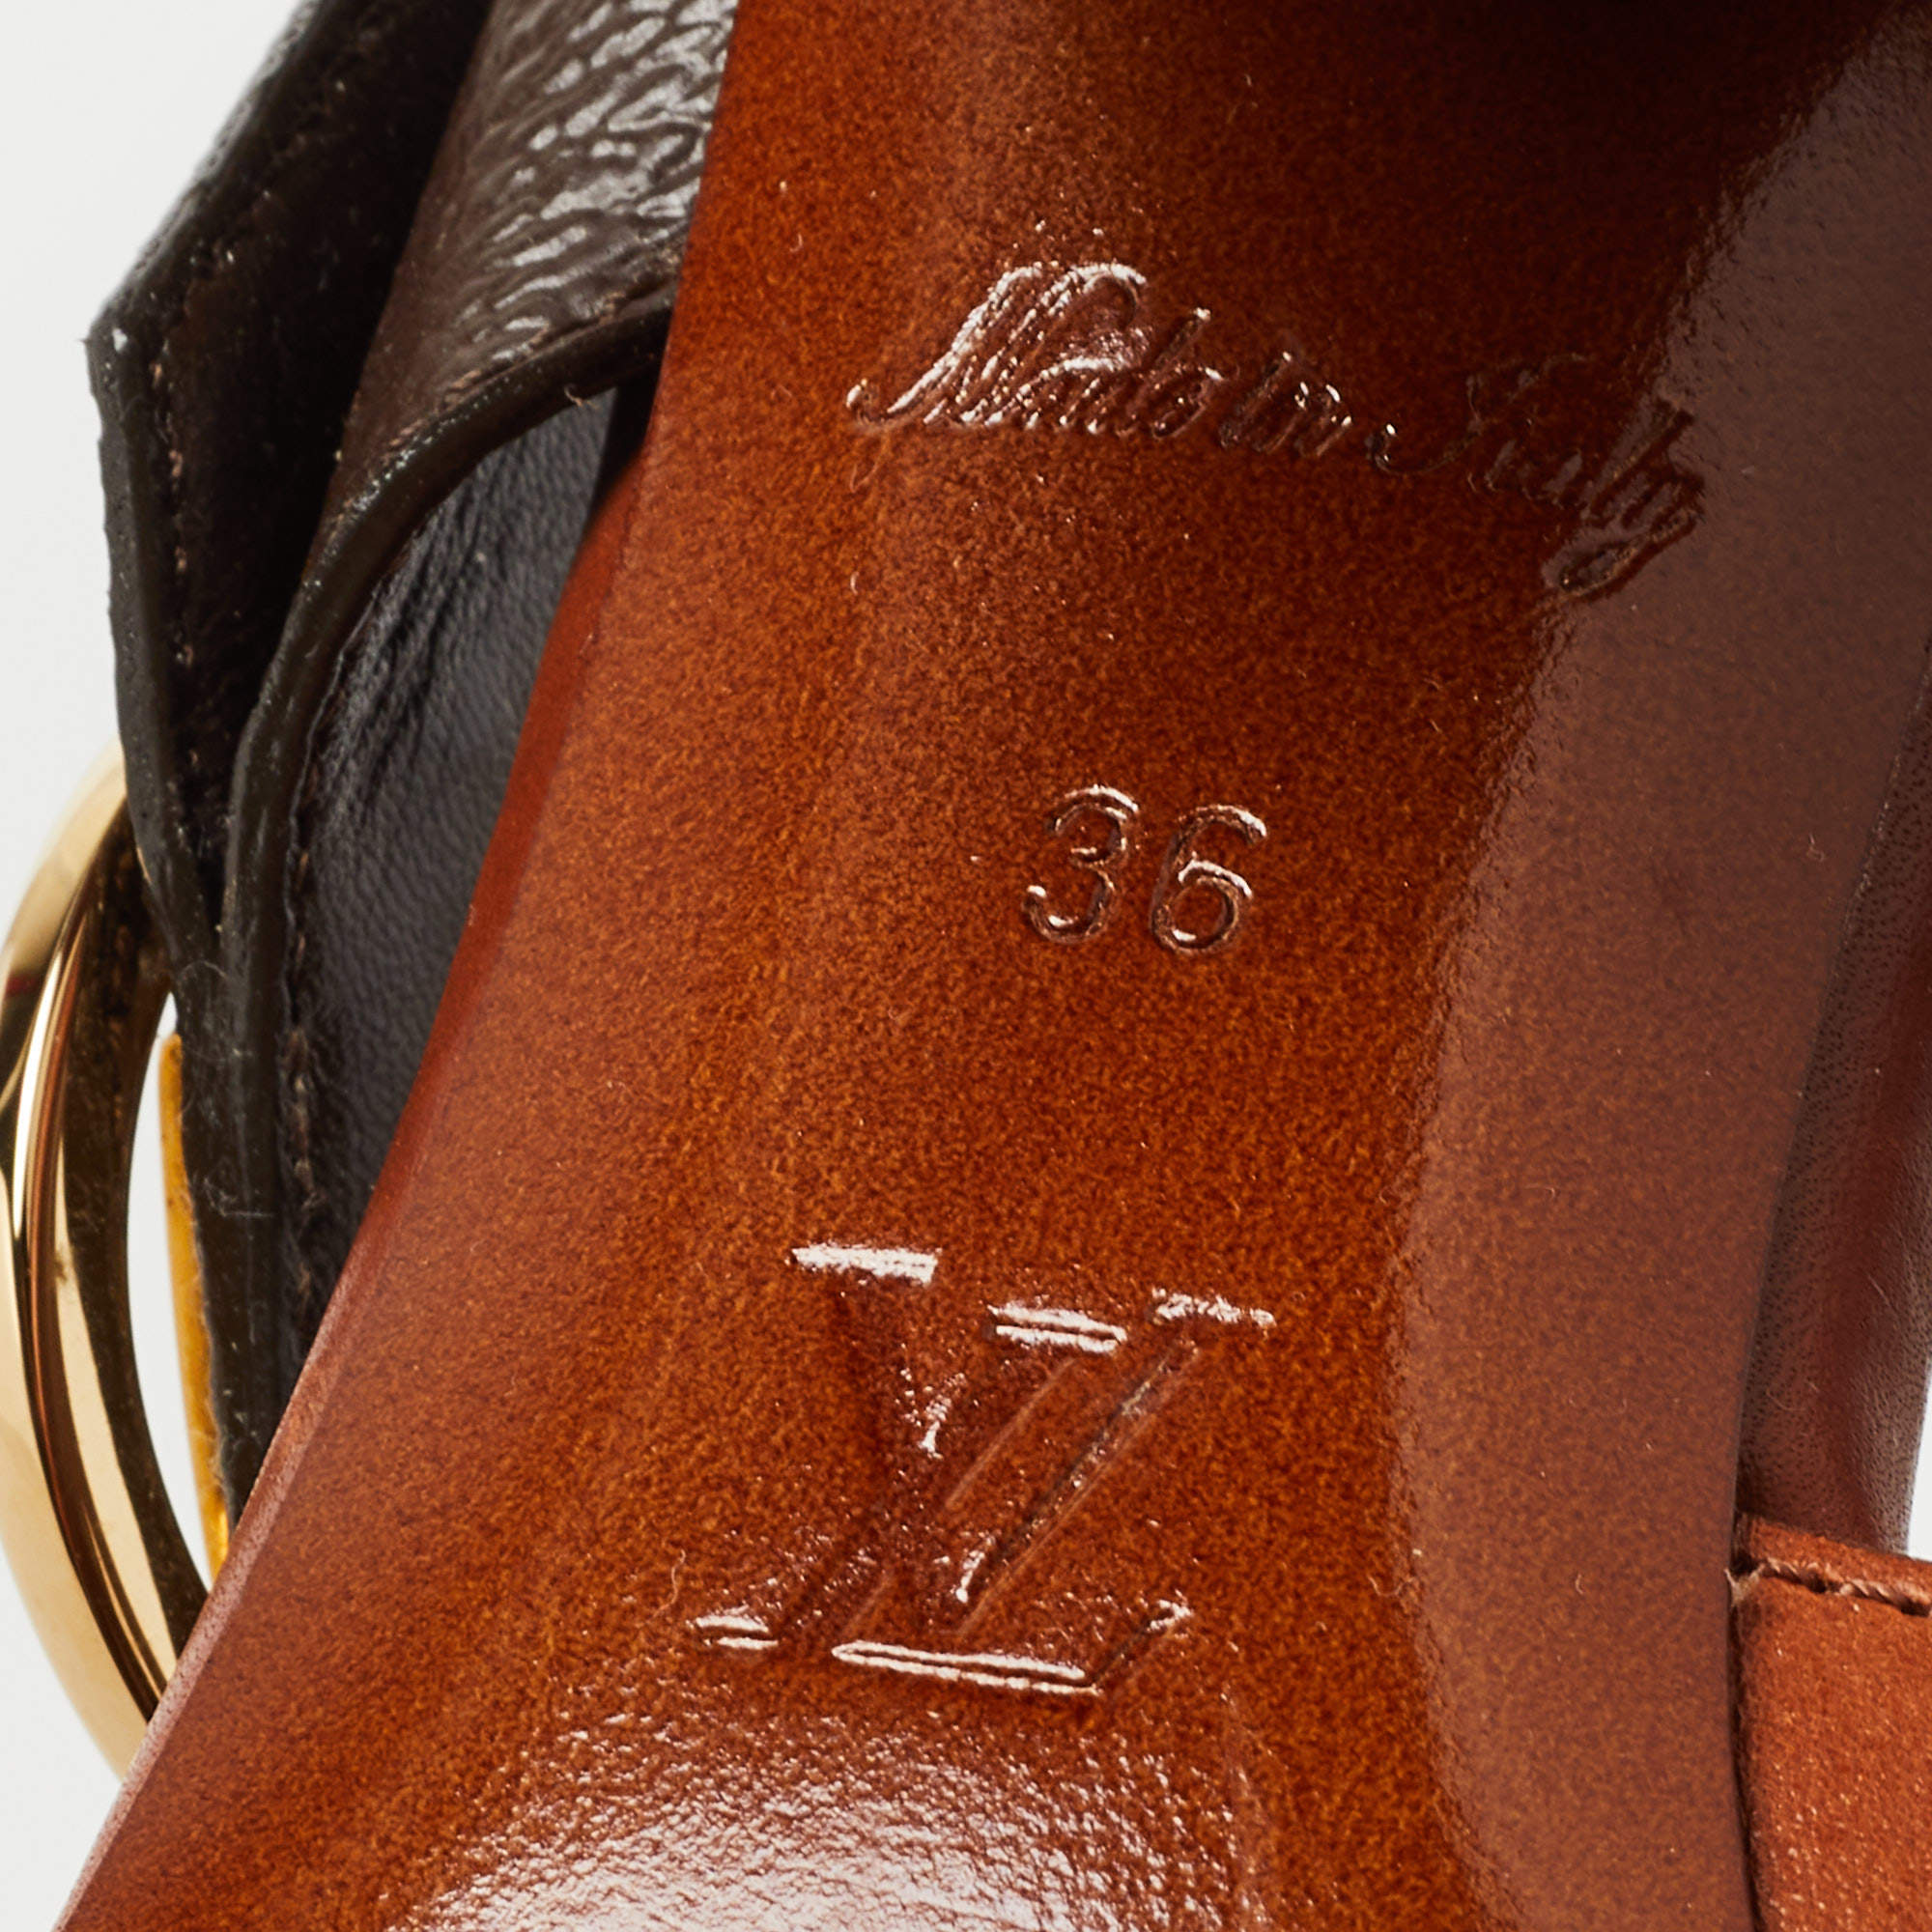 Louis Vuitton White Leather Sunset Velcro Slide Sandals Size 36